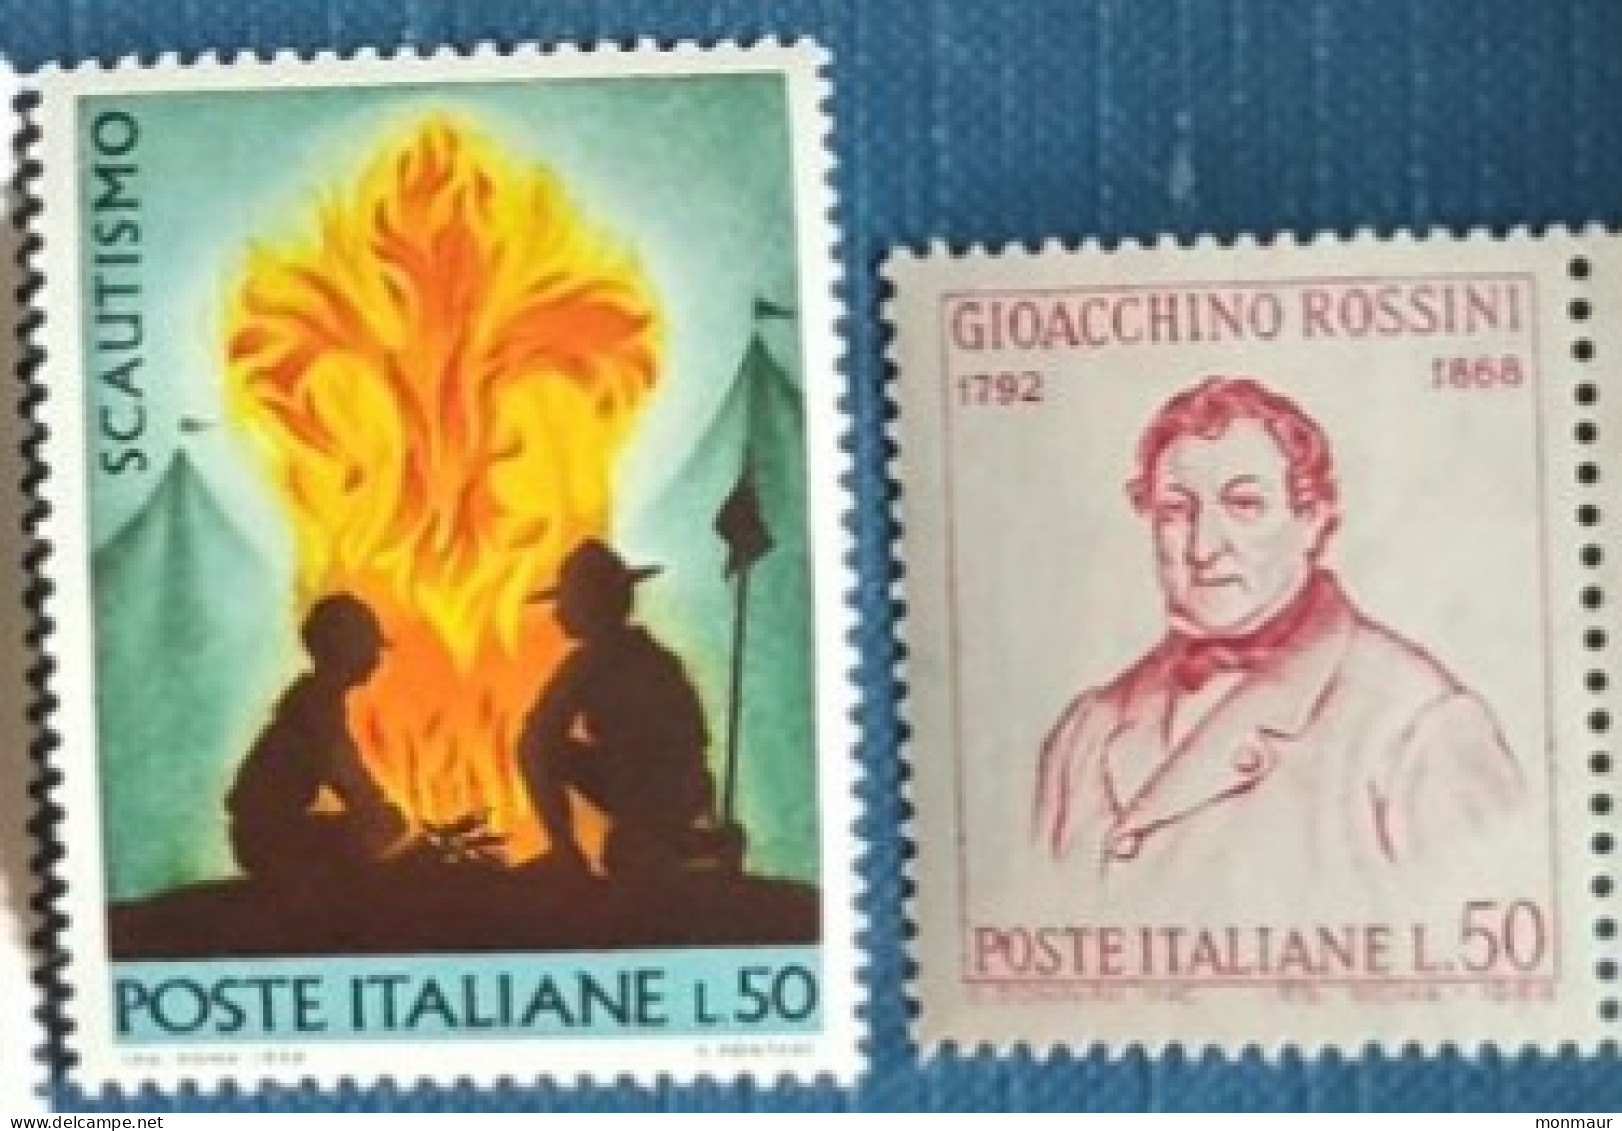 ITALIA 1968 CANALETTO-SCAUTISMO - 1961-70: Mint/hinged